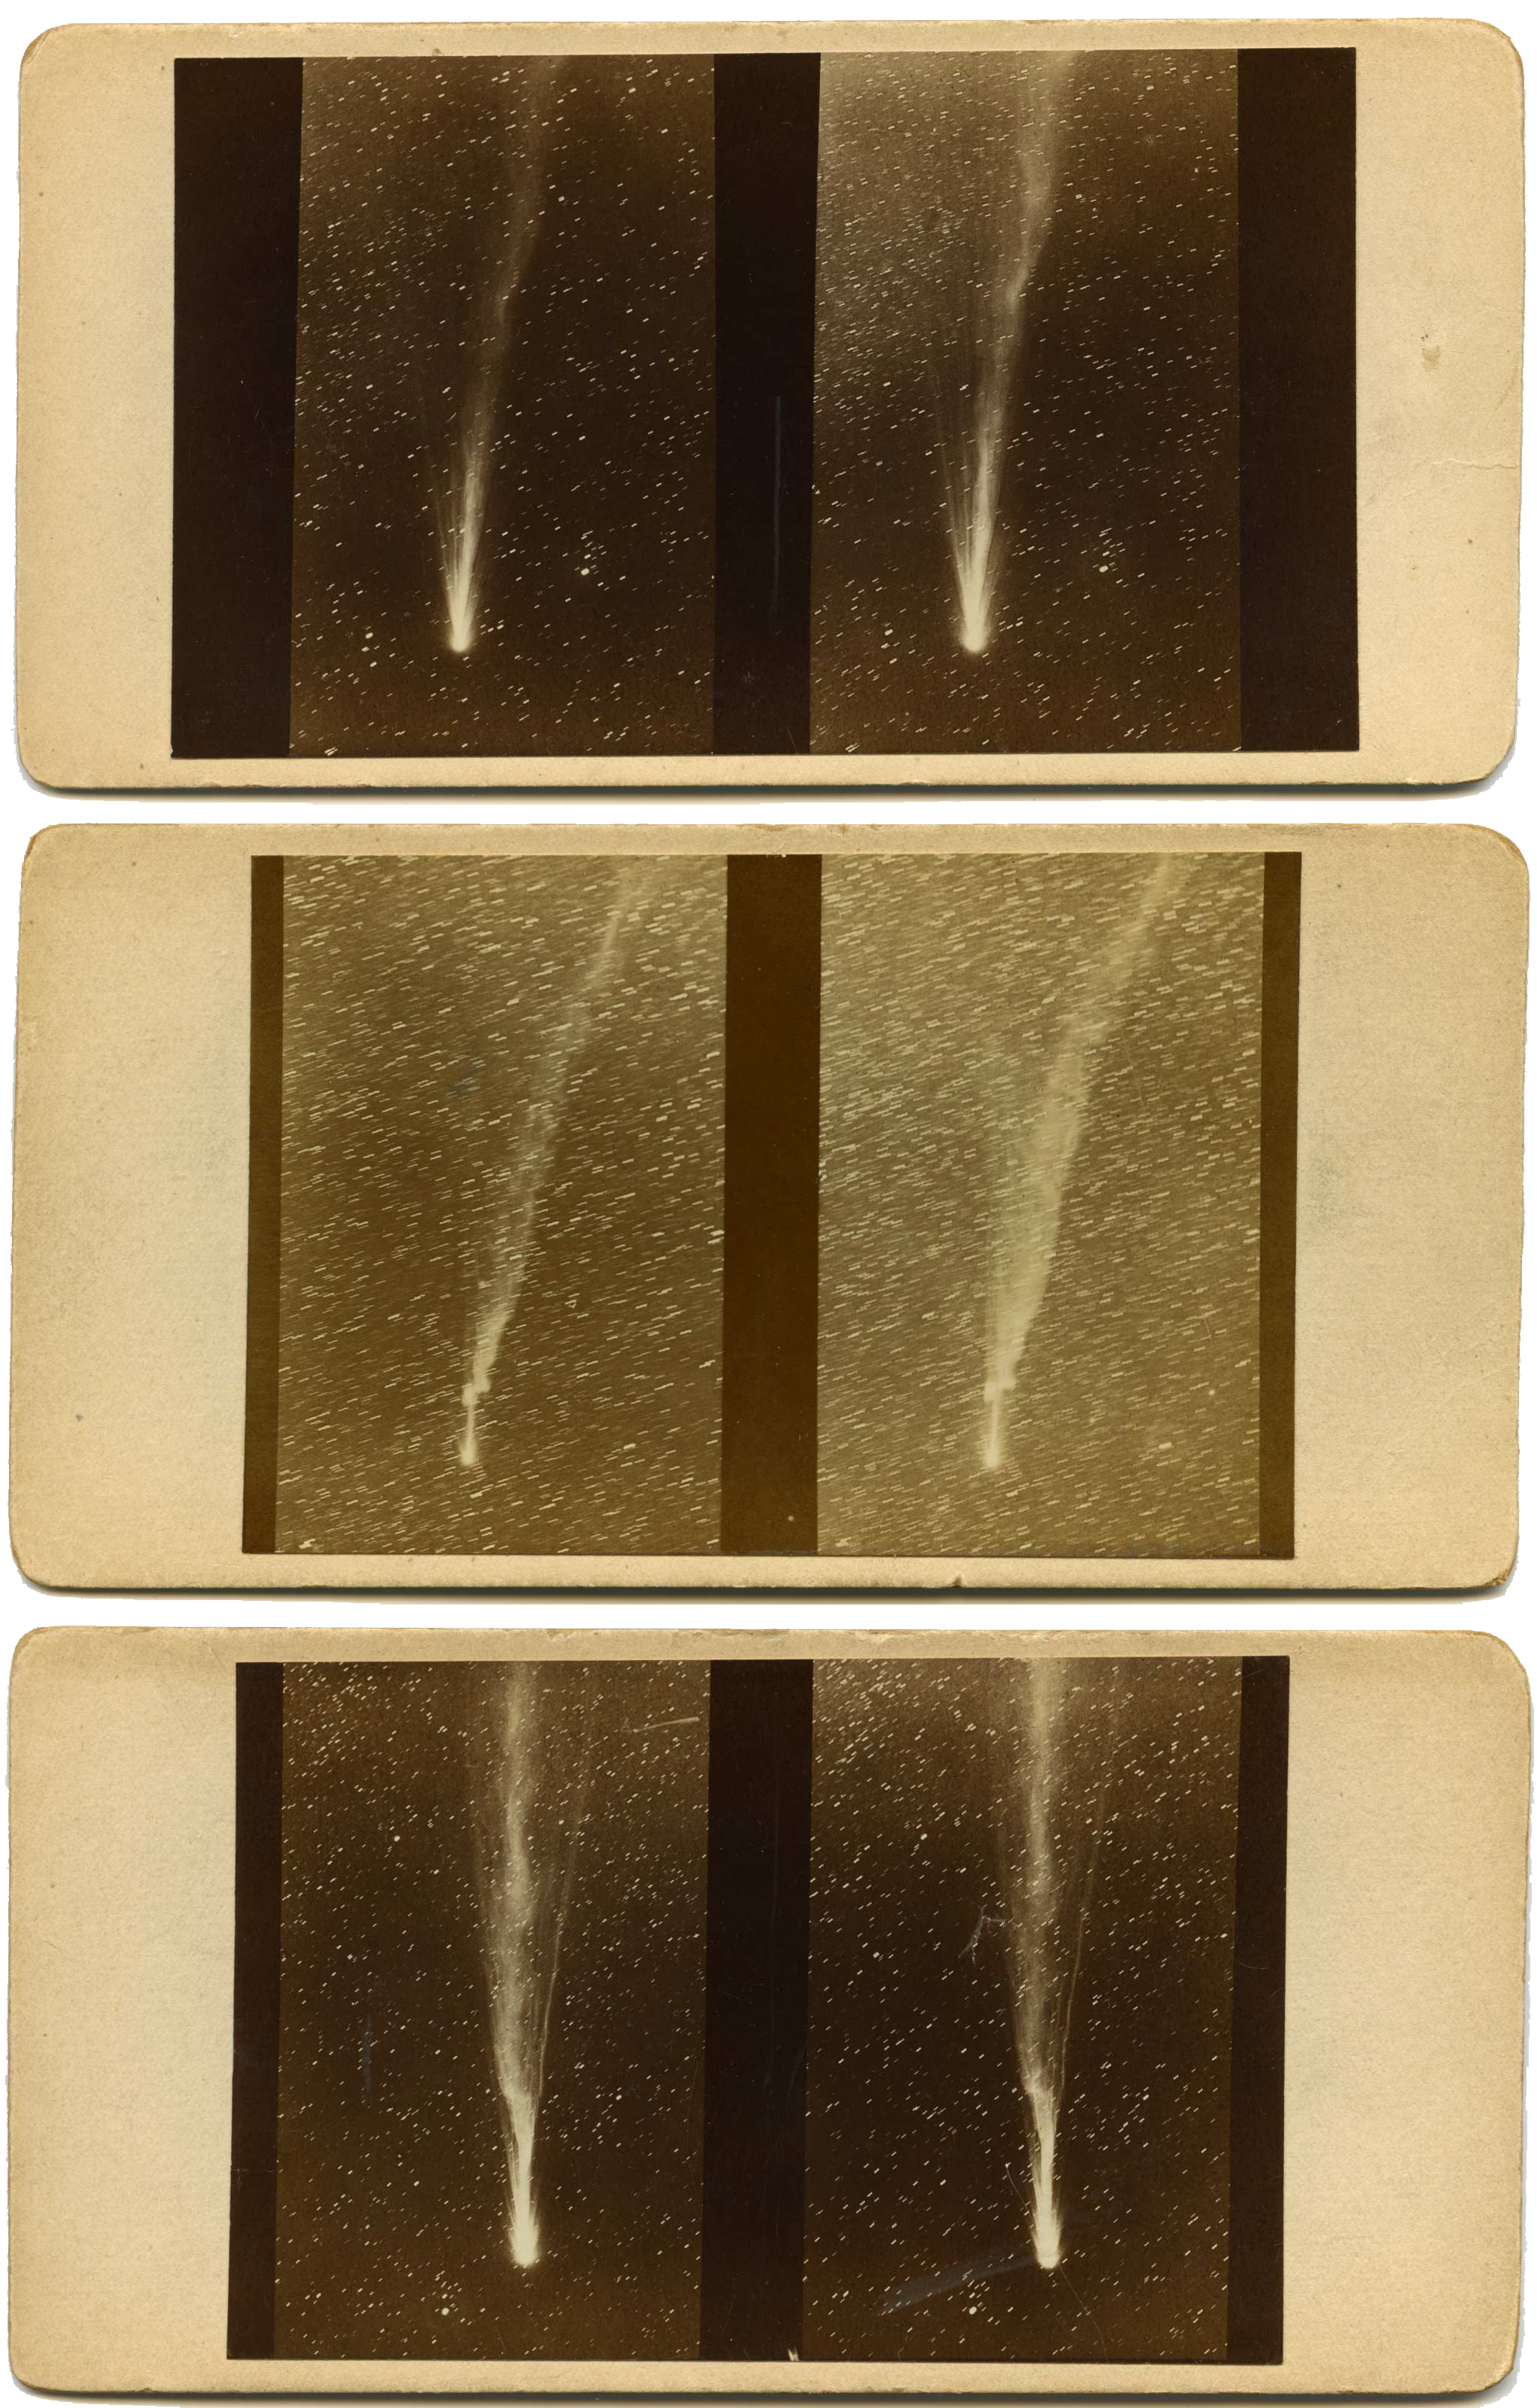 Edward Emerson Barnard :: Comet Morehouse, 3 stereo cards, UK, 1908. | src anamorfose